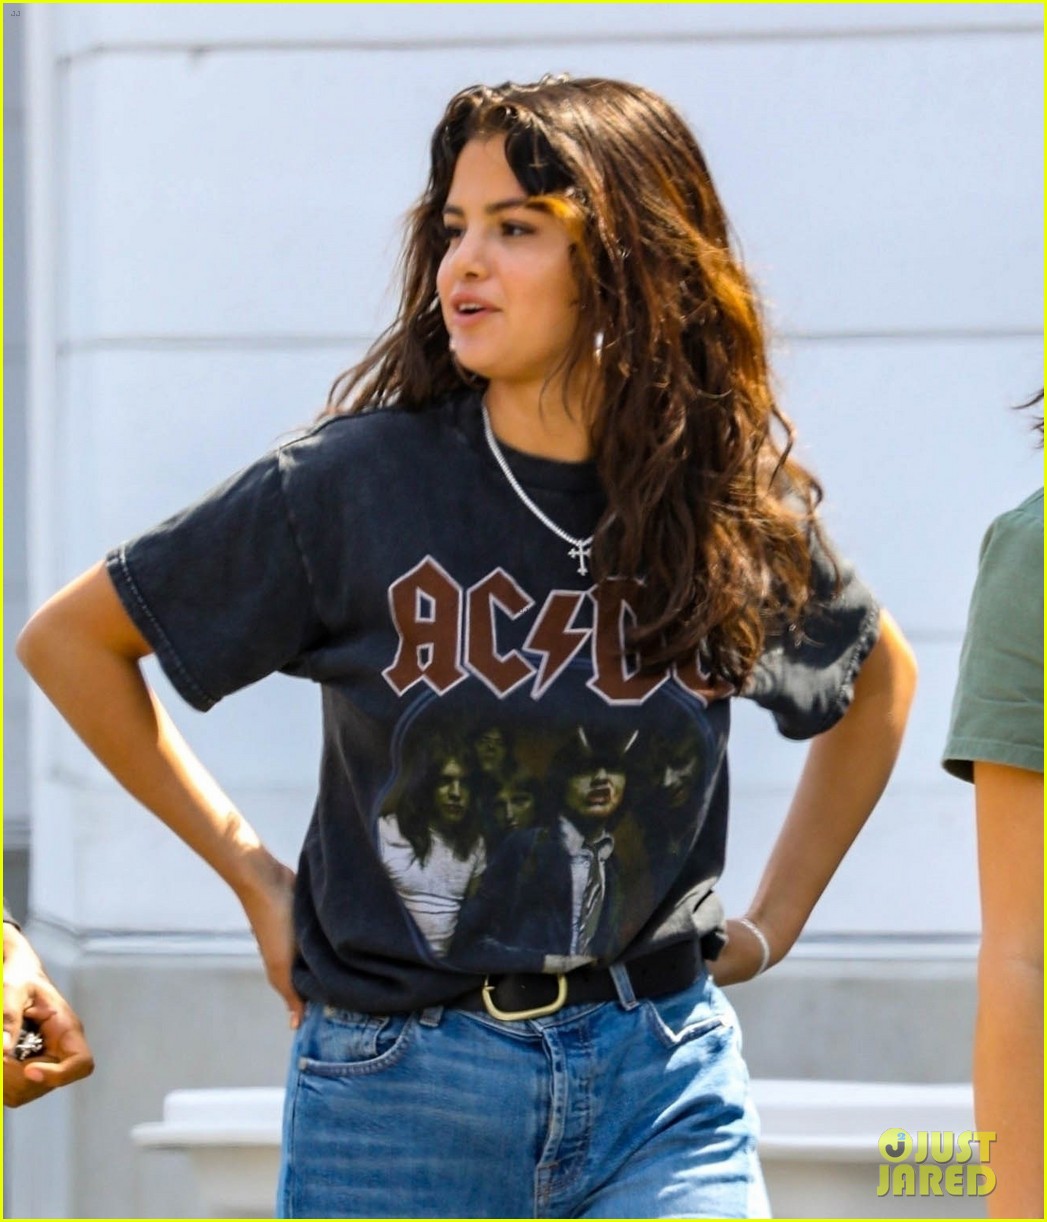 Konkurrencedygtige I modsætning til bemærkning Selena Gomez Pairs Her AC/DC Band Tee with Denim Jeans: Photo 4122876 | Selena  Gomez Photos | Just Jared: Entertainment News